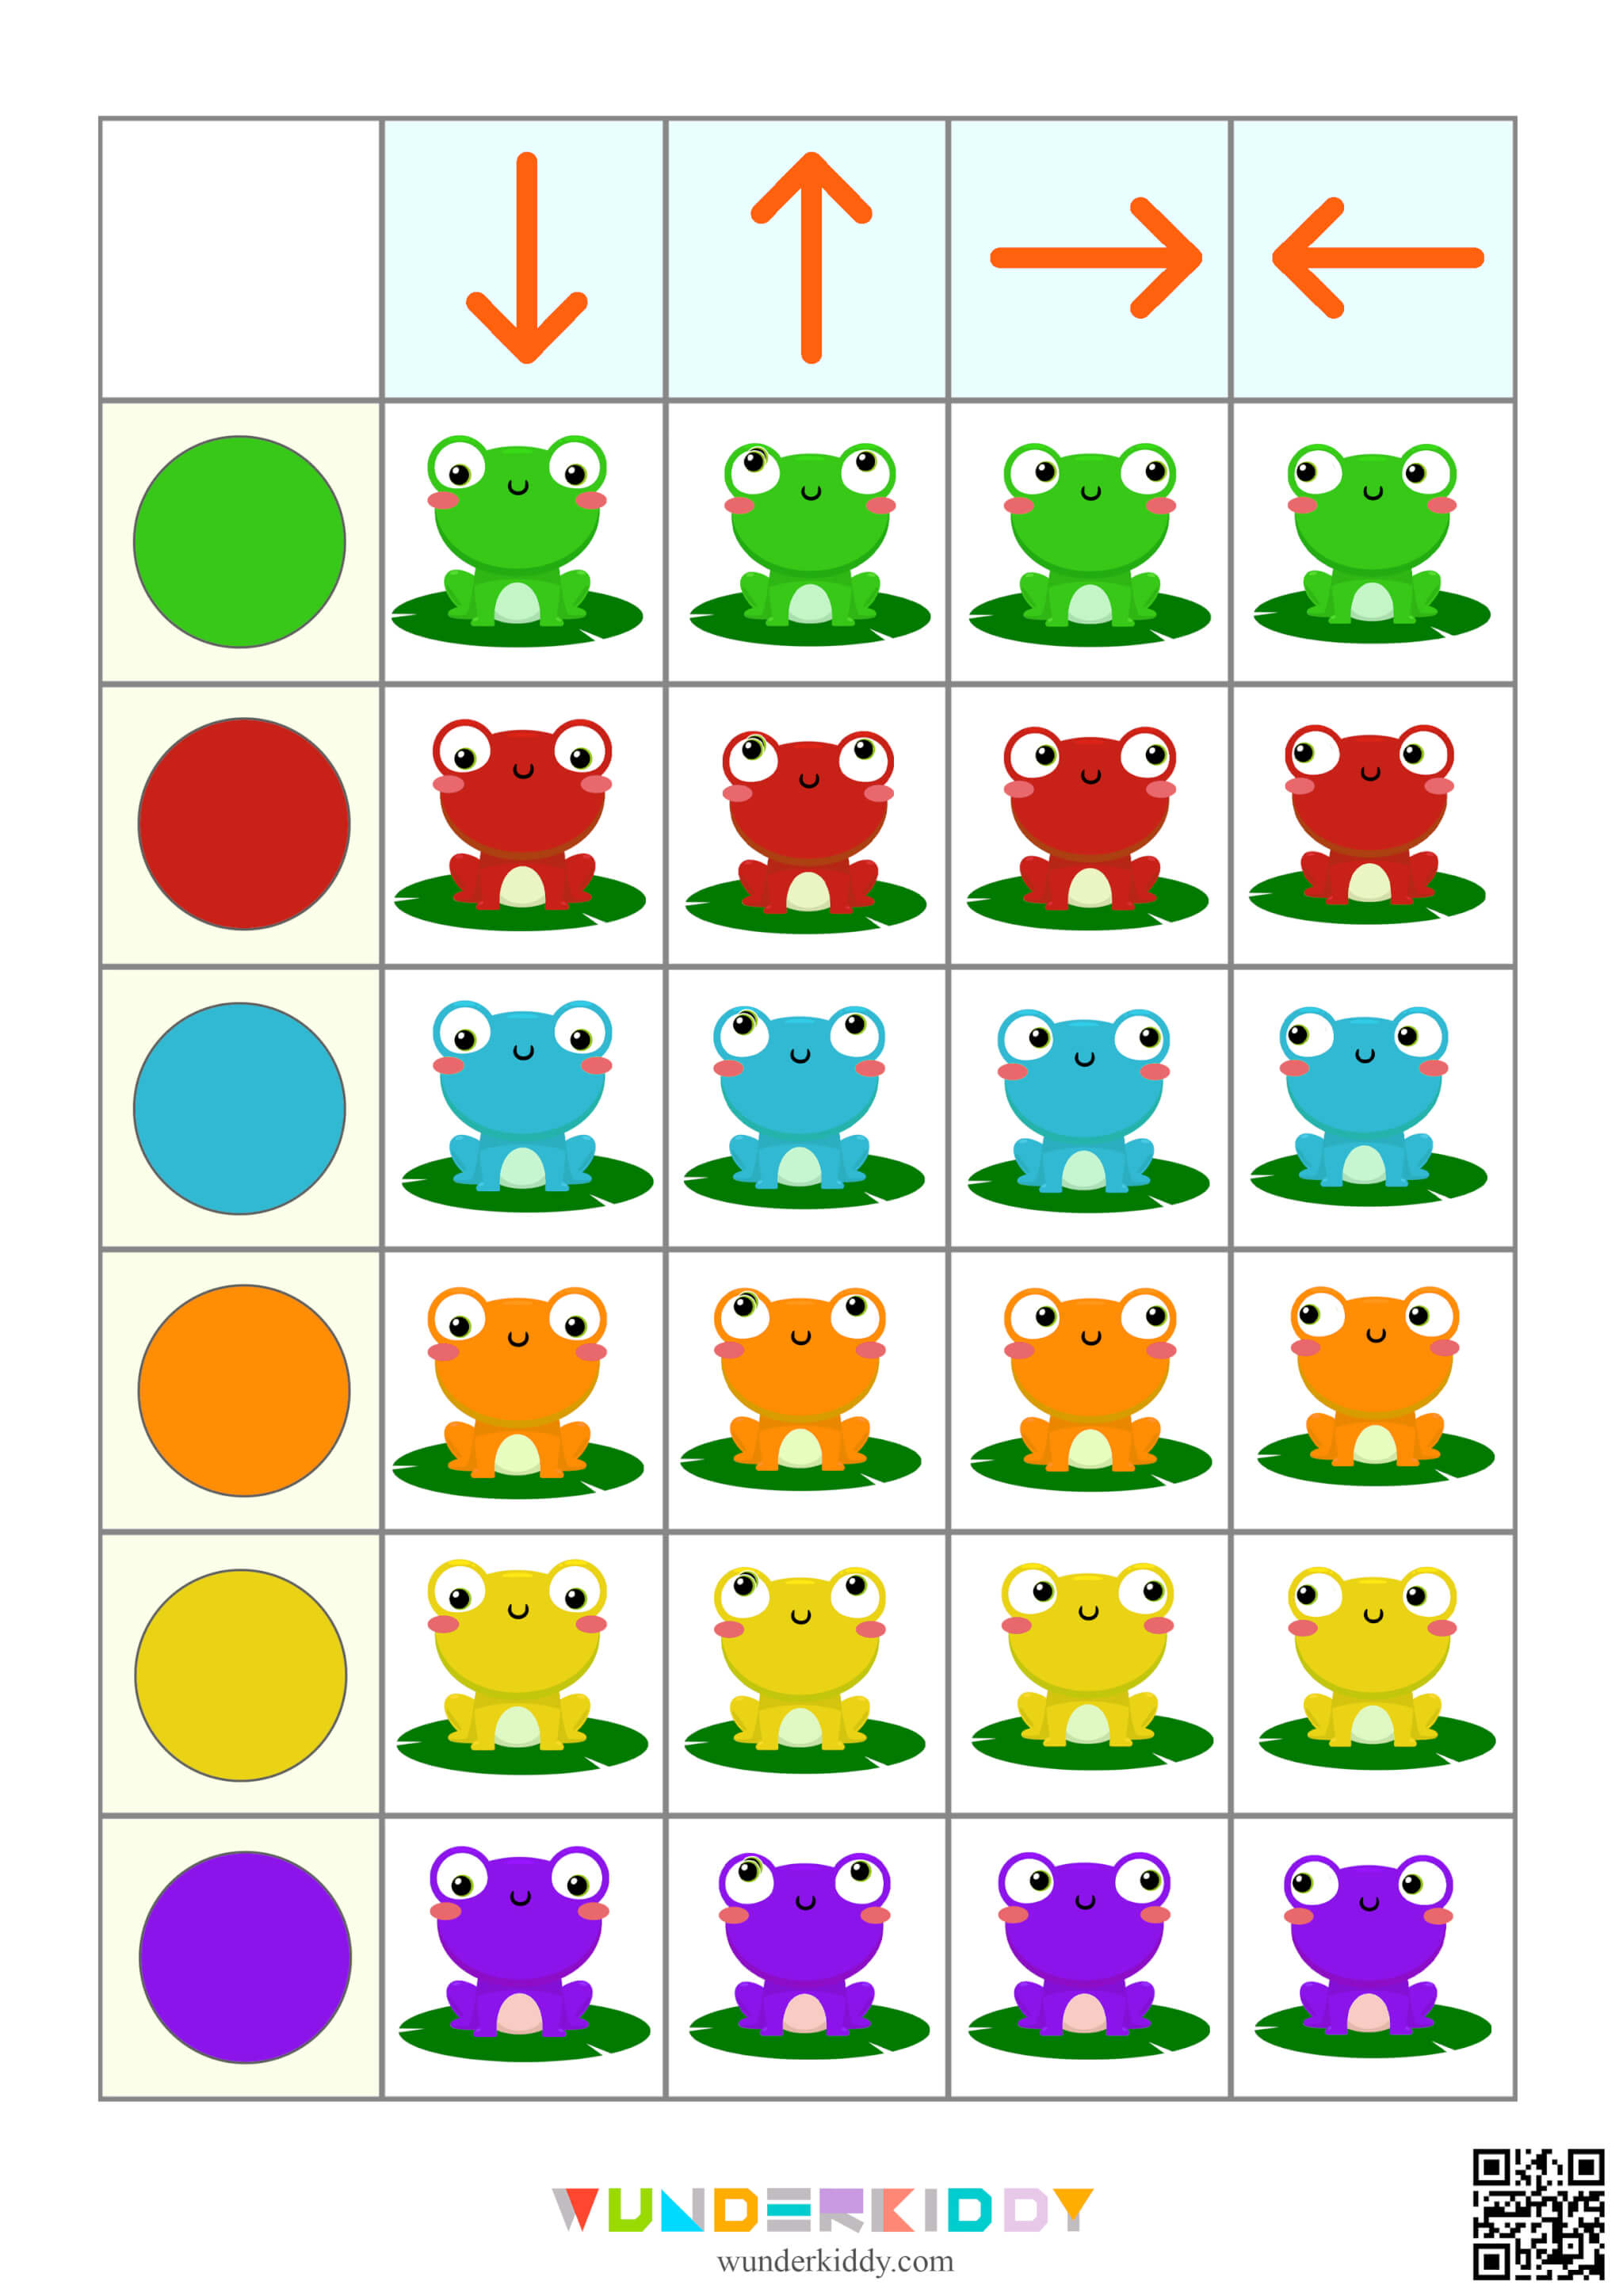 Frog Color Match Game for Kids - Image 2